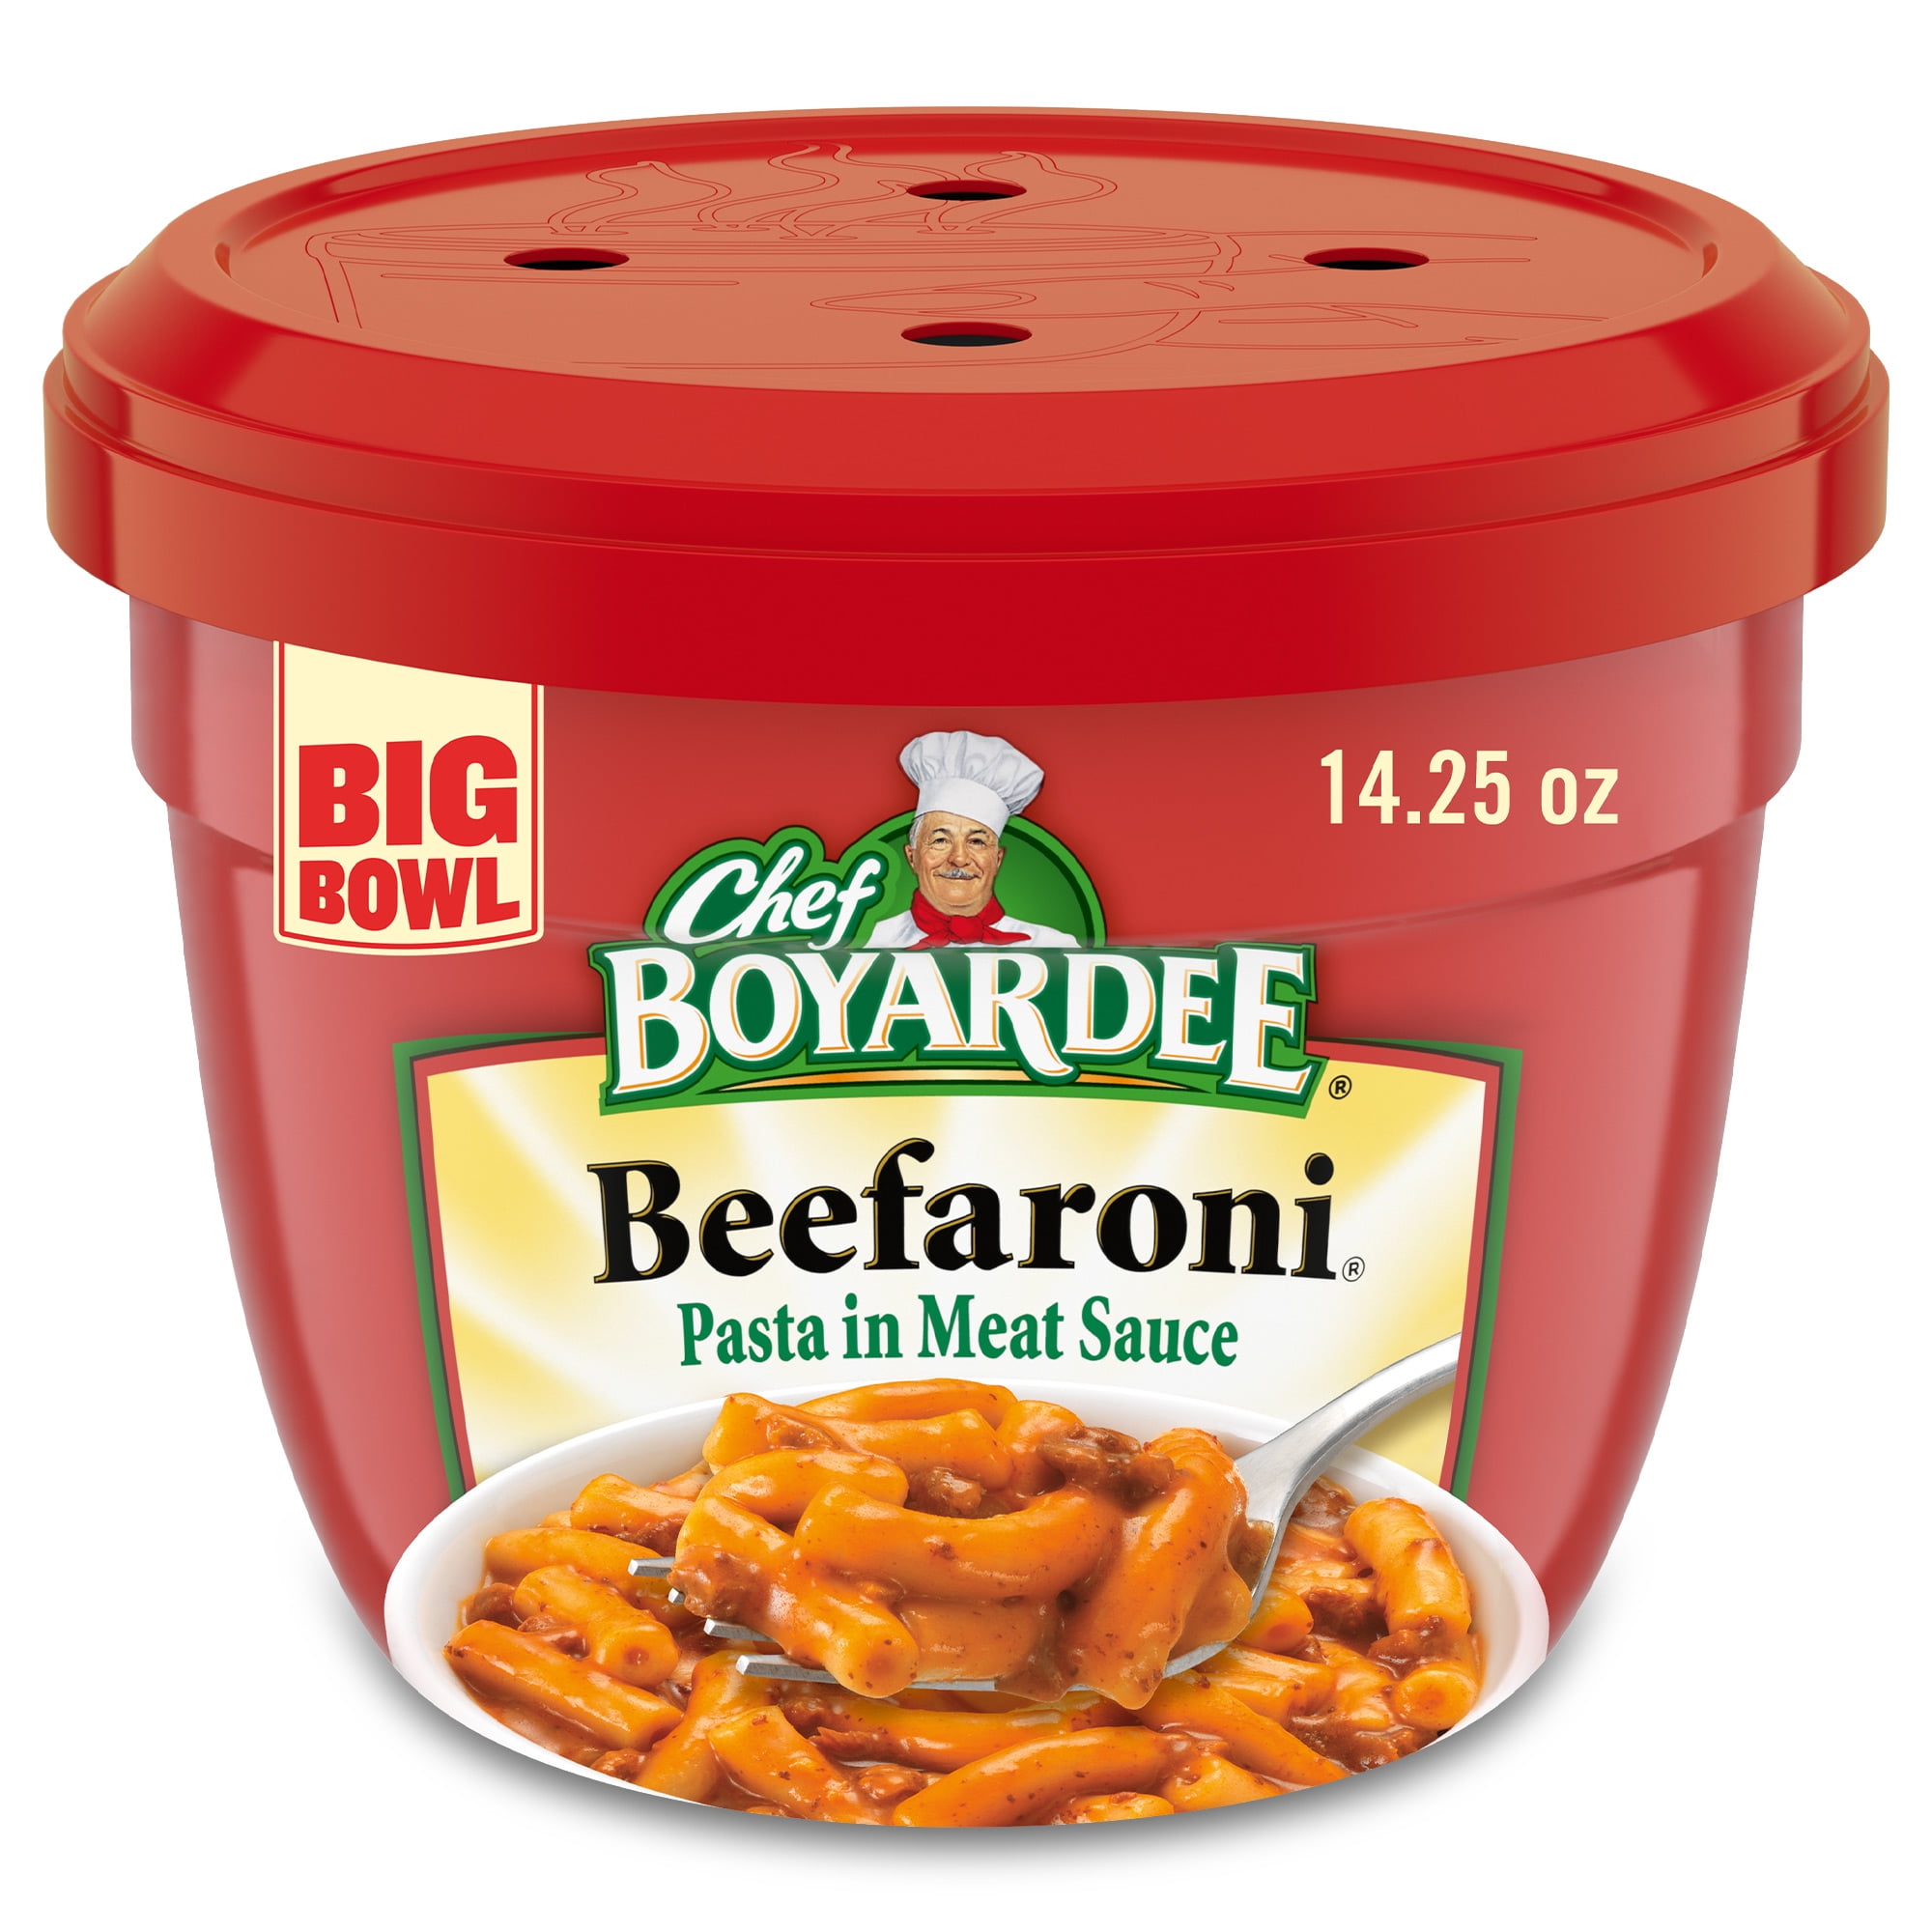 Chef Boyardee Big Bowl Beefaroni, 14.25 oz.